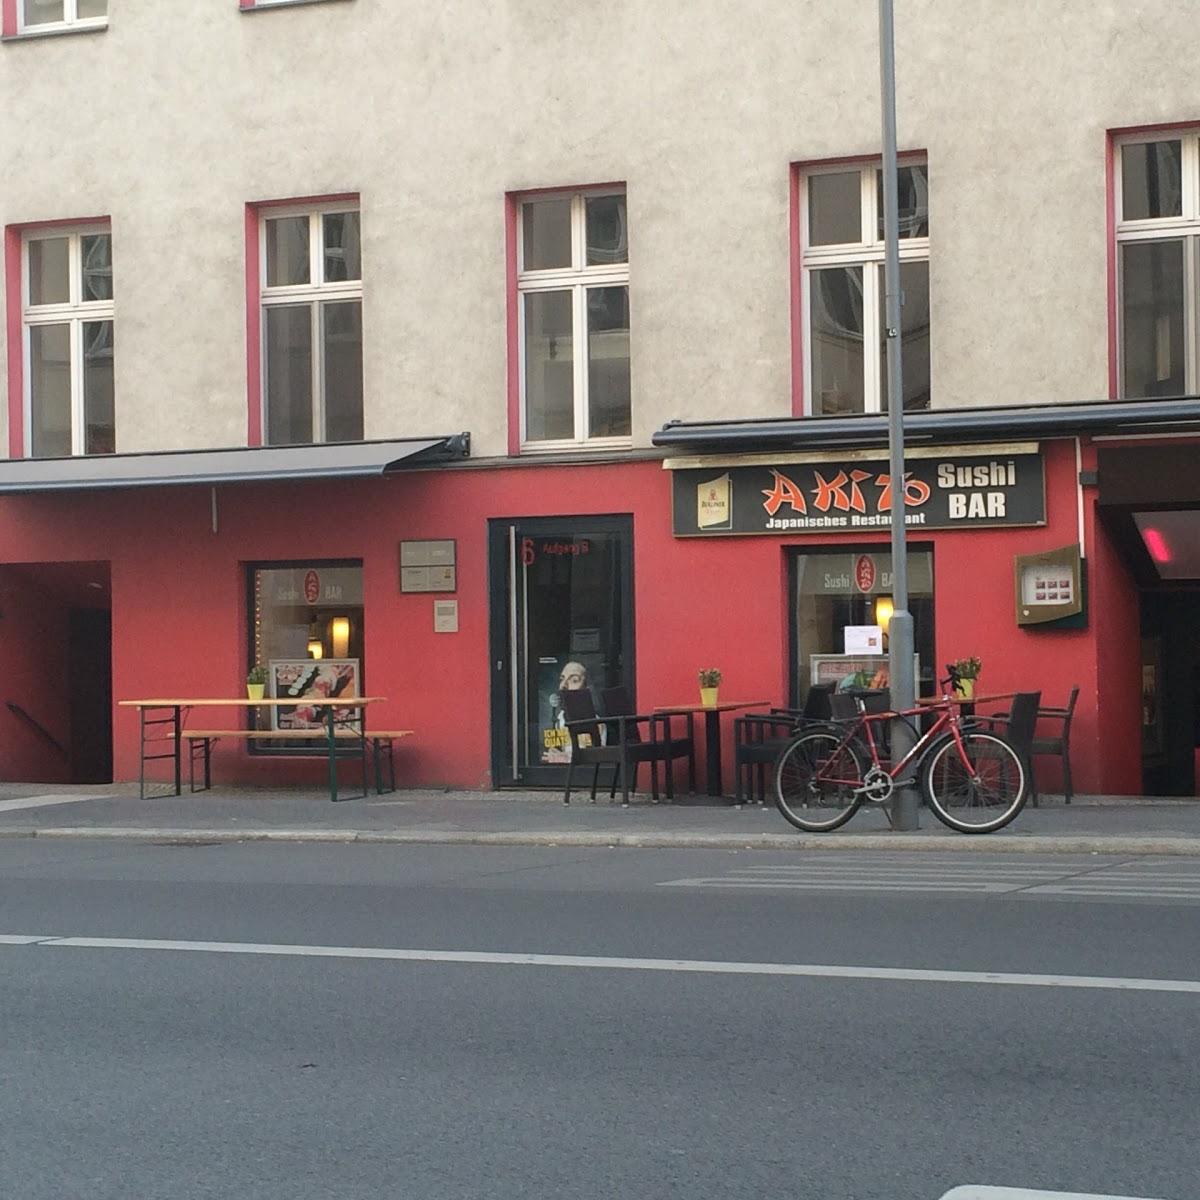 Restaurant "Akito" in Berlin